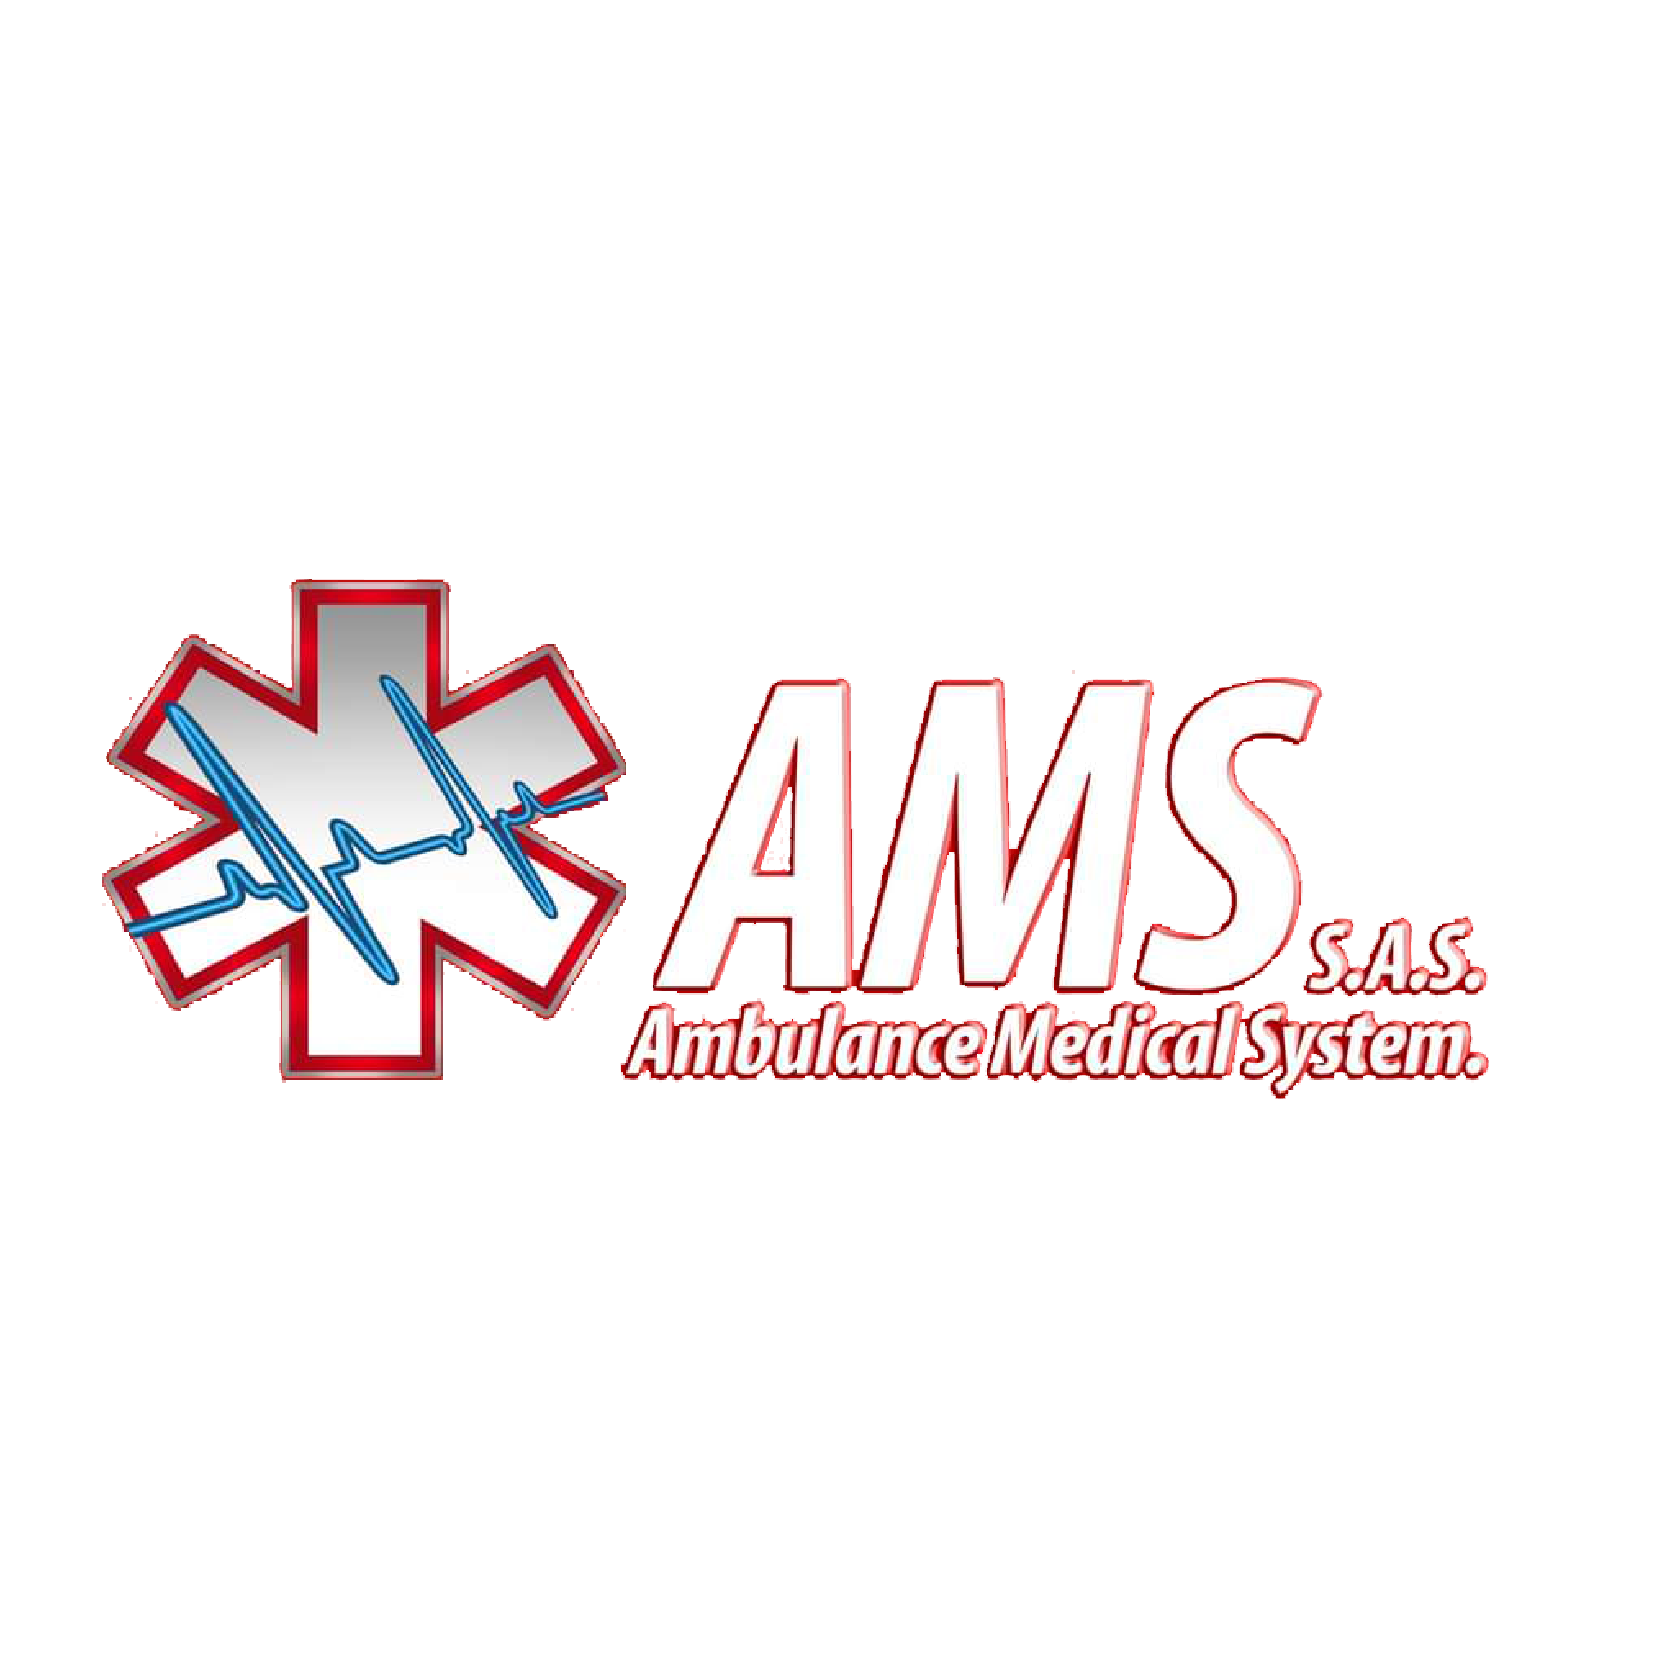 19_ams ambulance.png